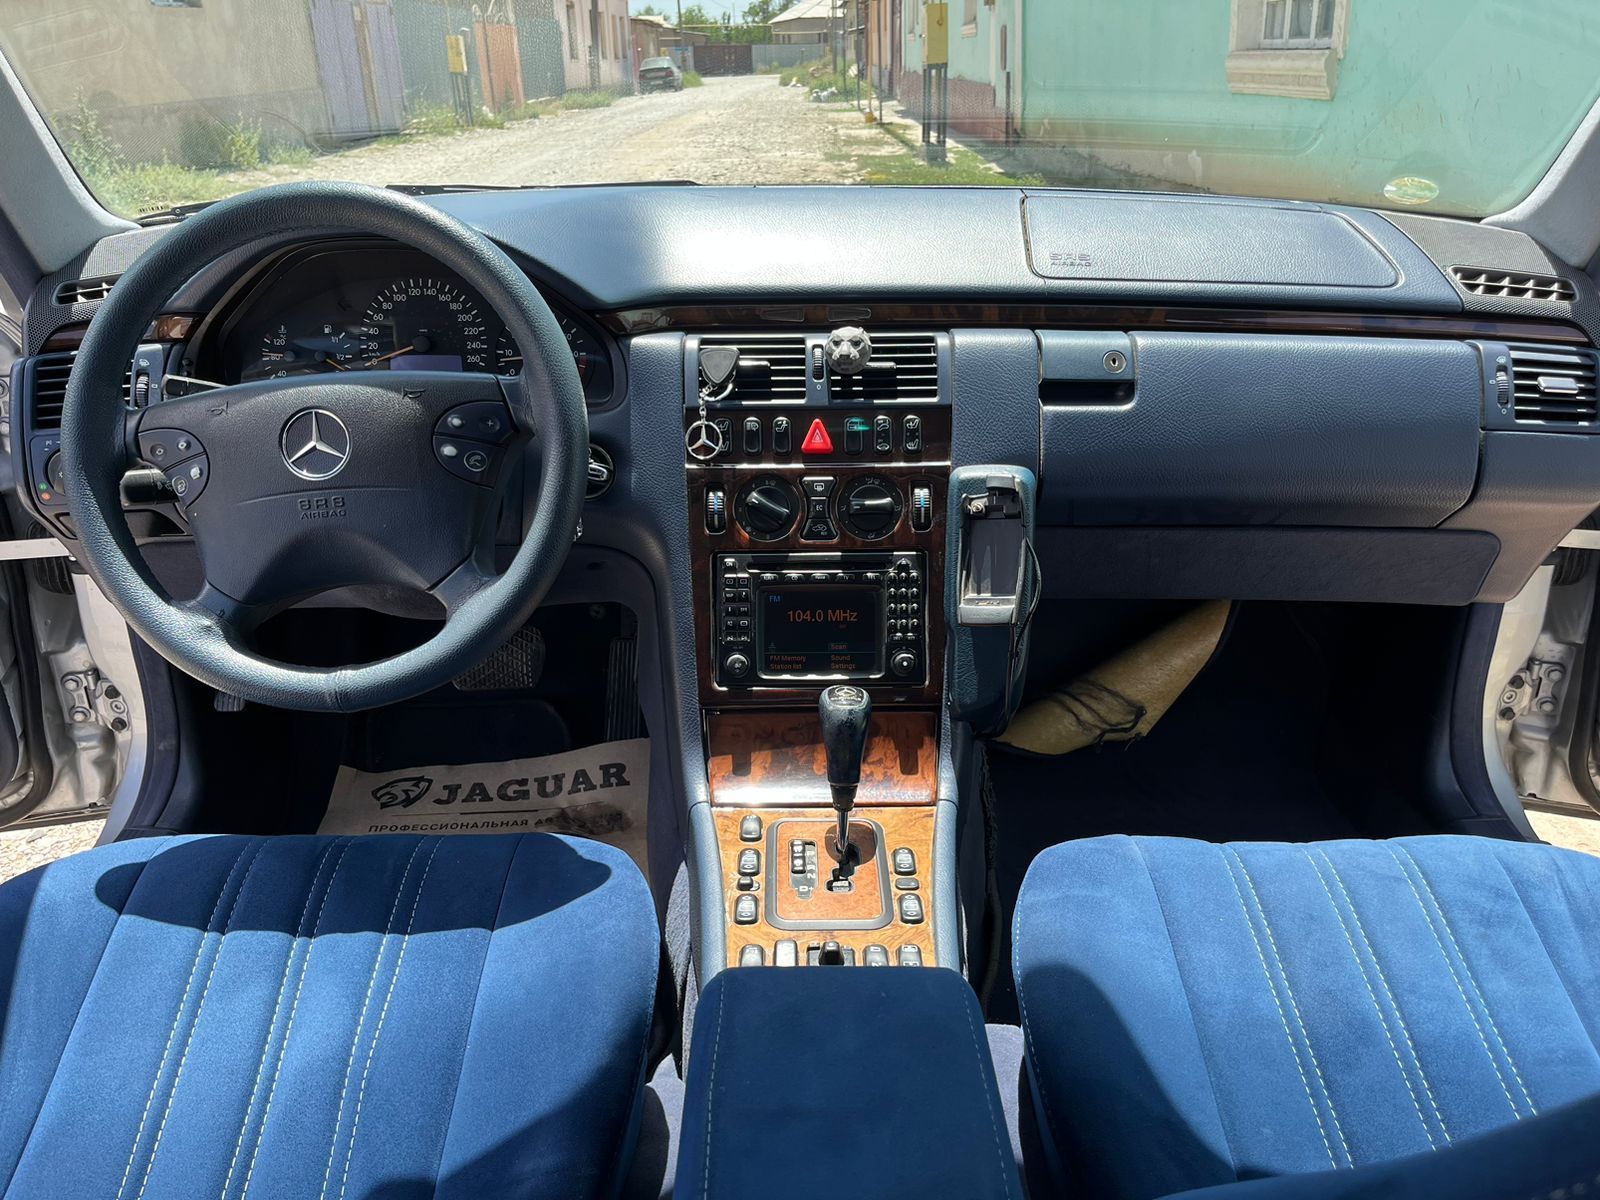 Салон Mercedes Benz w210